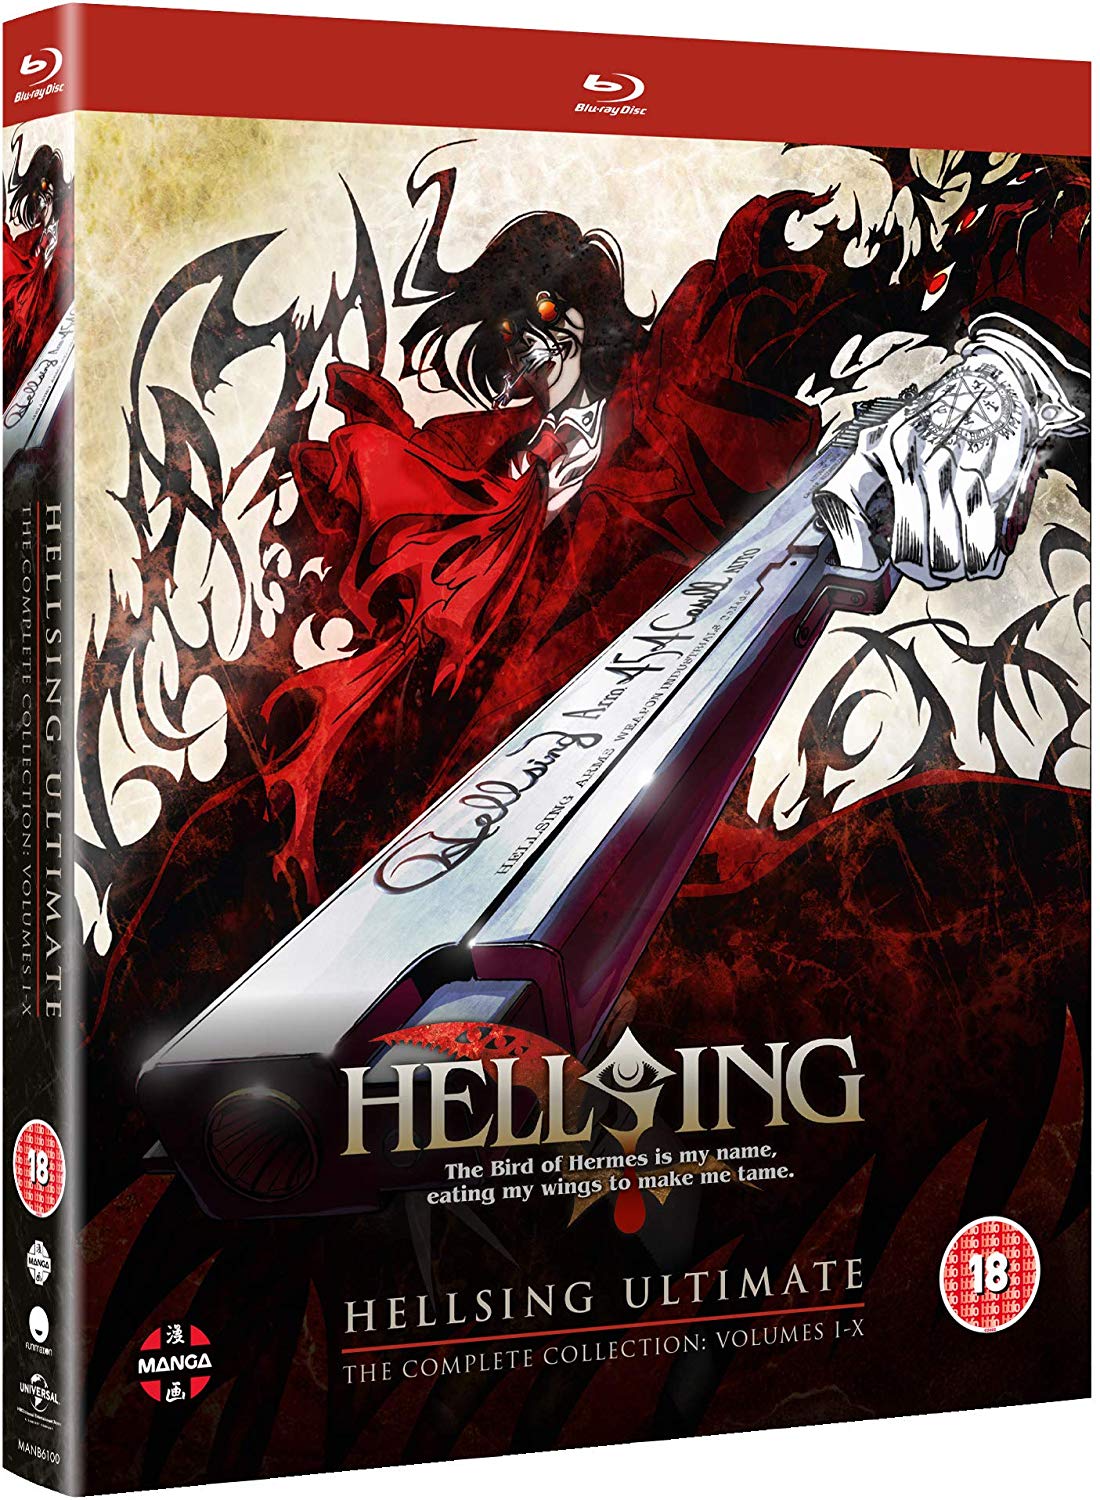 Review: Hellsing Ultimate